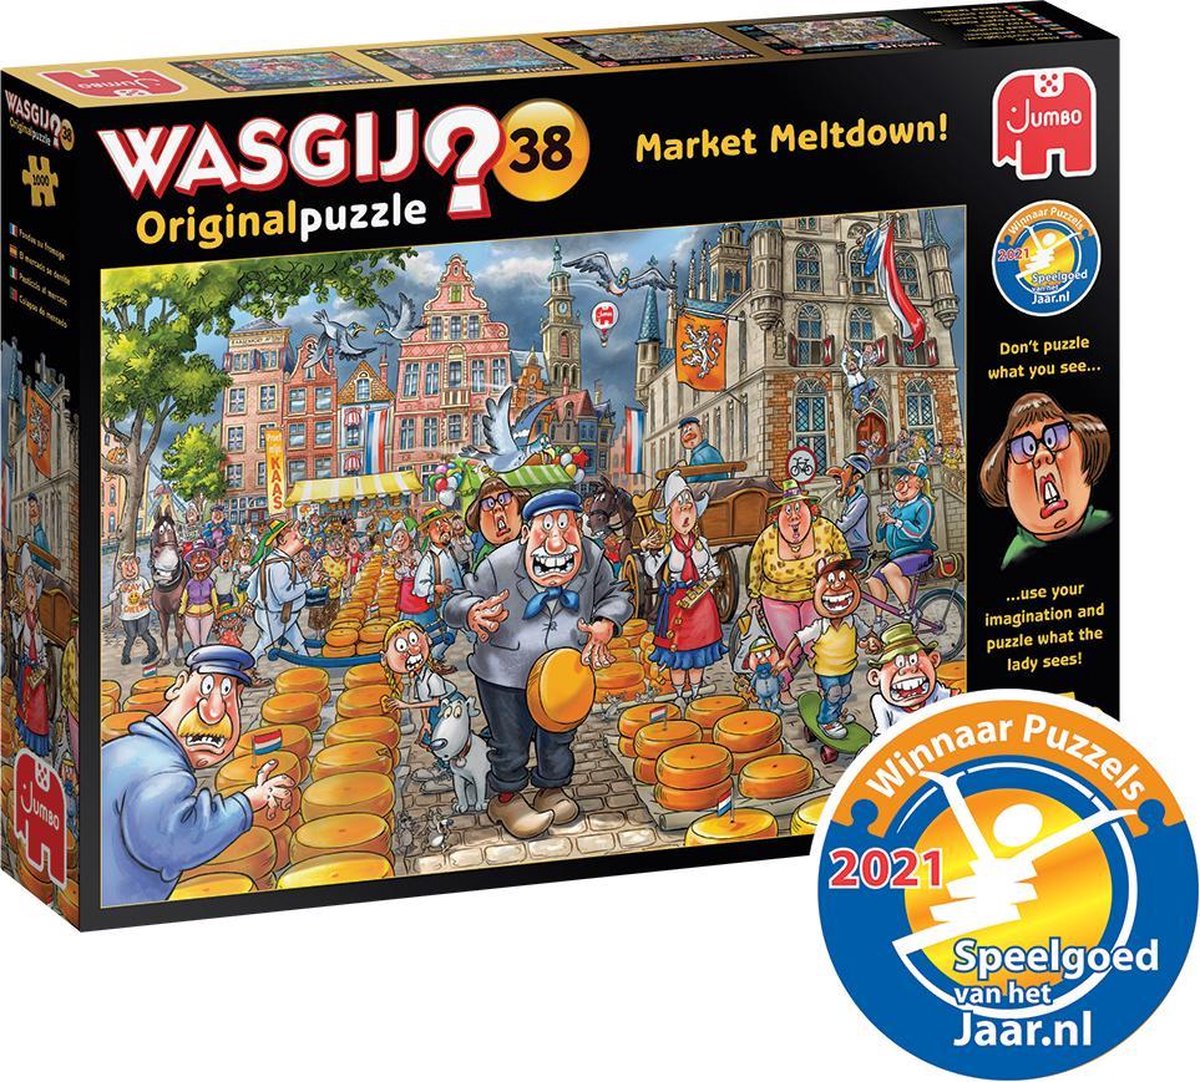 Wasgij Original 38 Kaasalarm puzzel - 1000 stukjes | bol.com